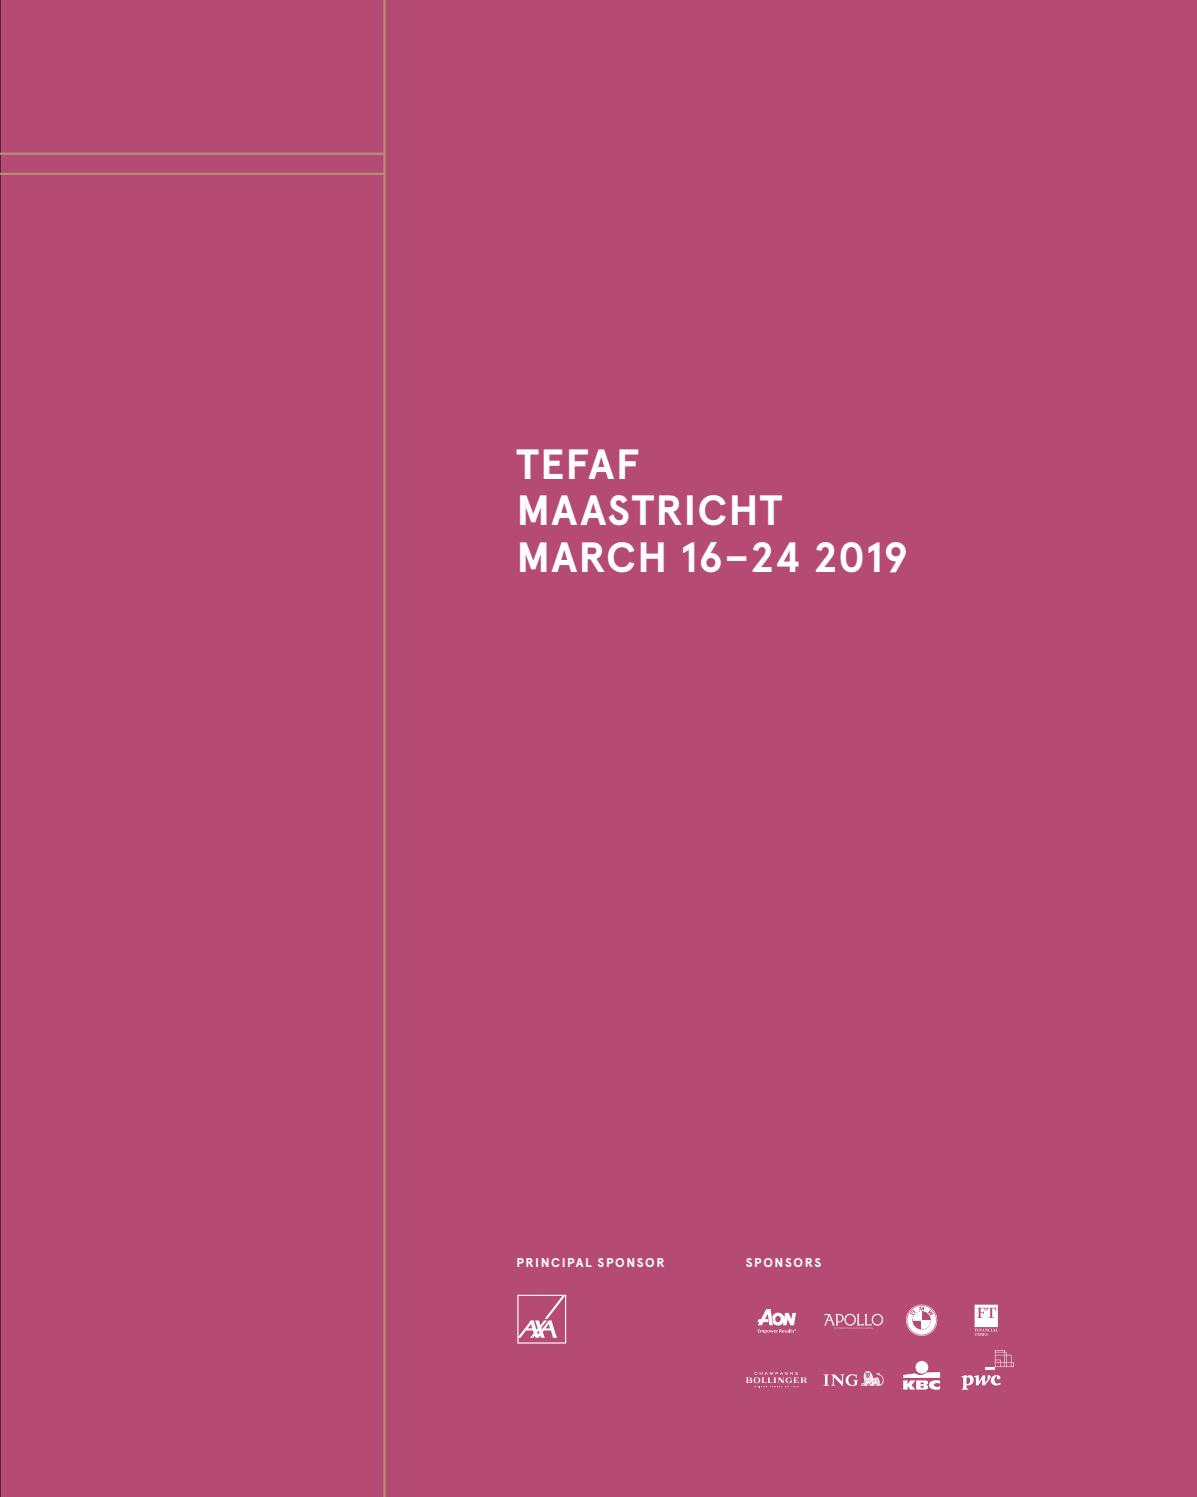 Le Grand Jardin De Chine Reims Best Of Tefaf Maastricht 2019 Catalogue by Tefaf issuu